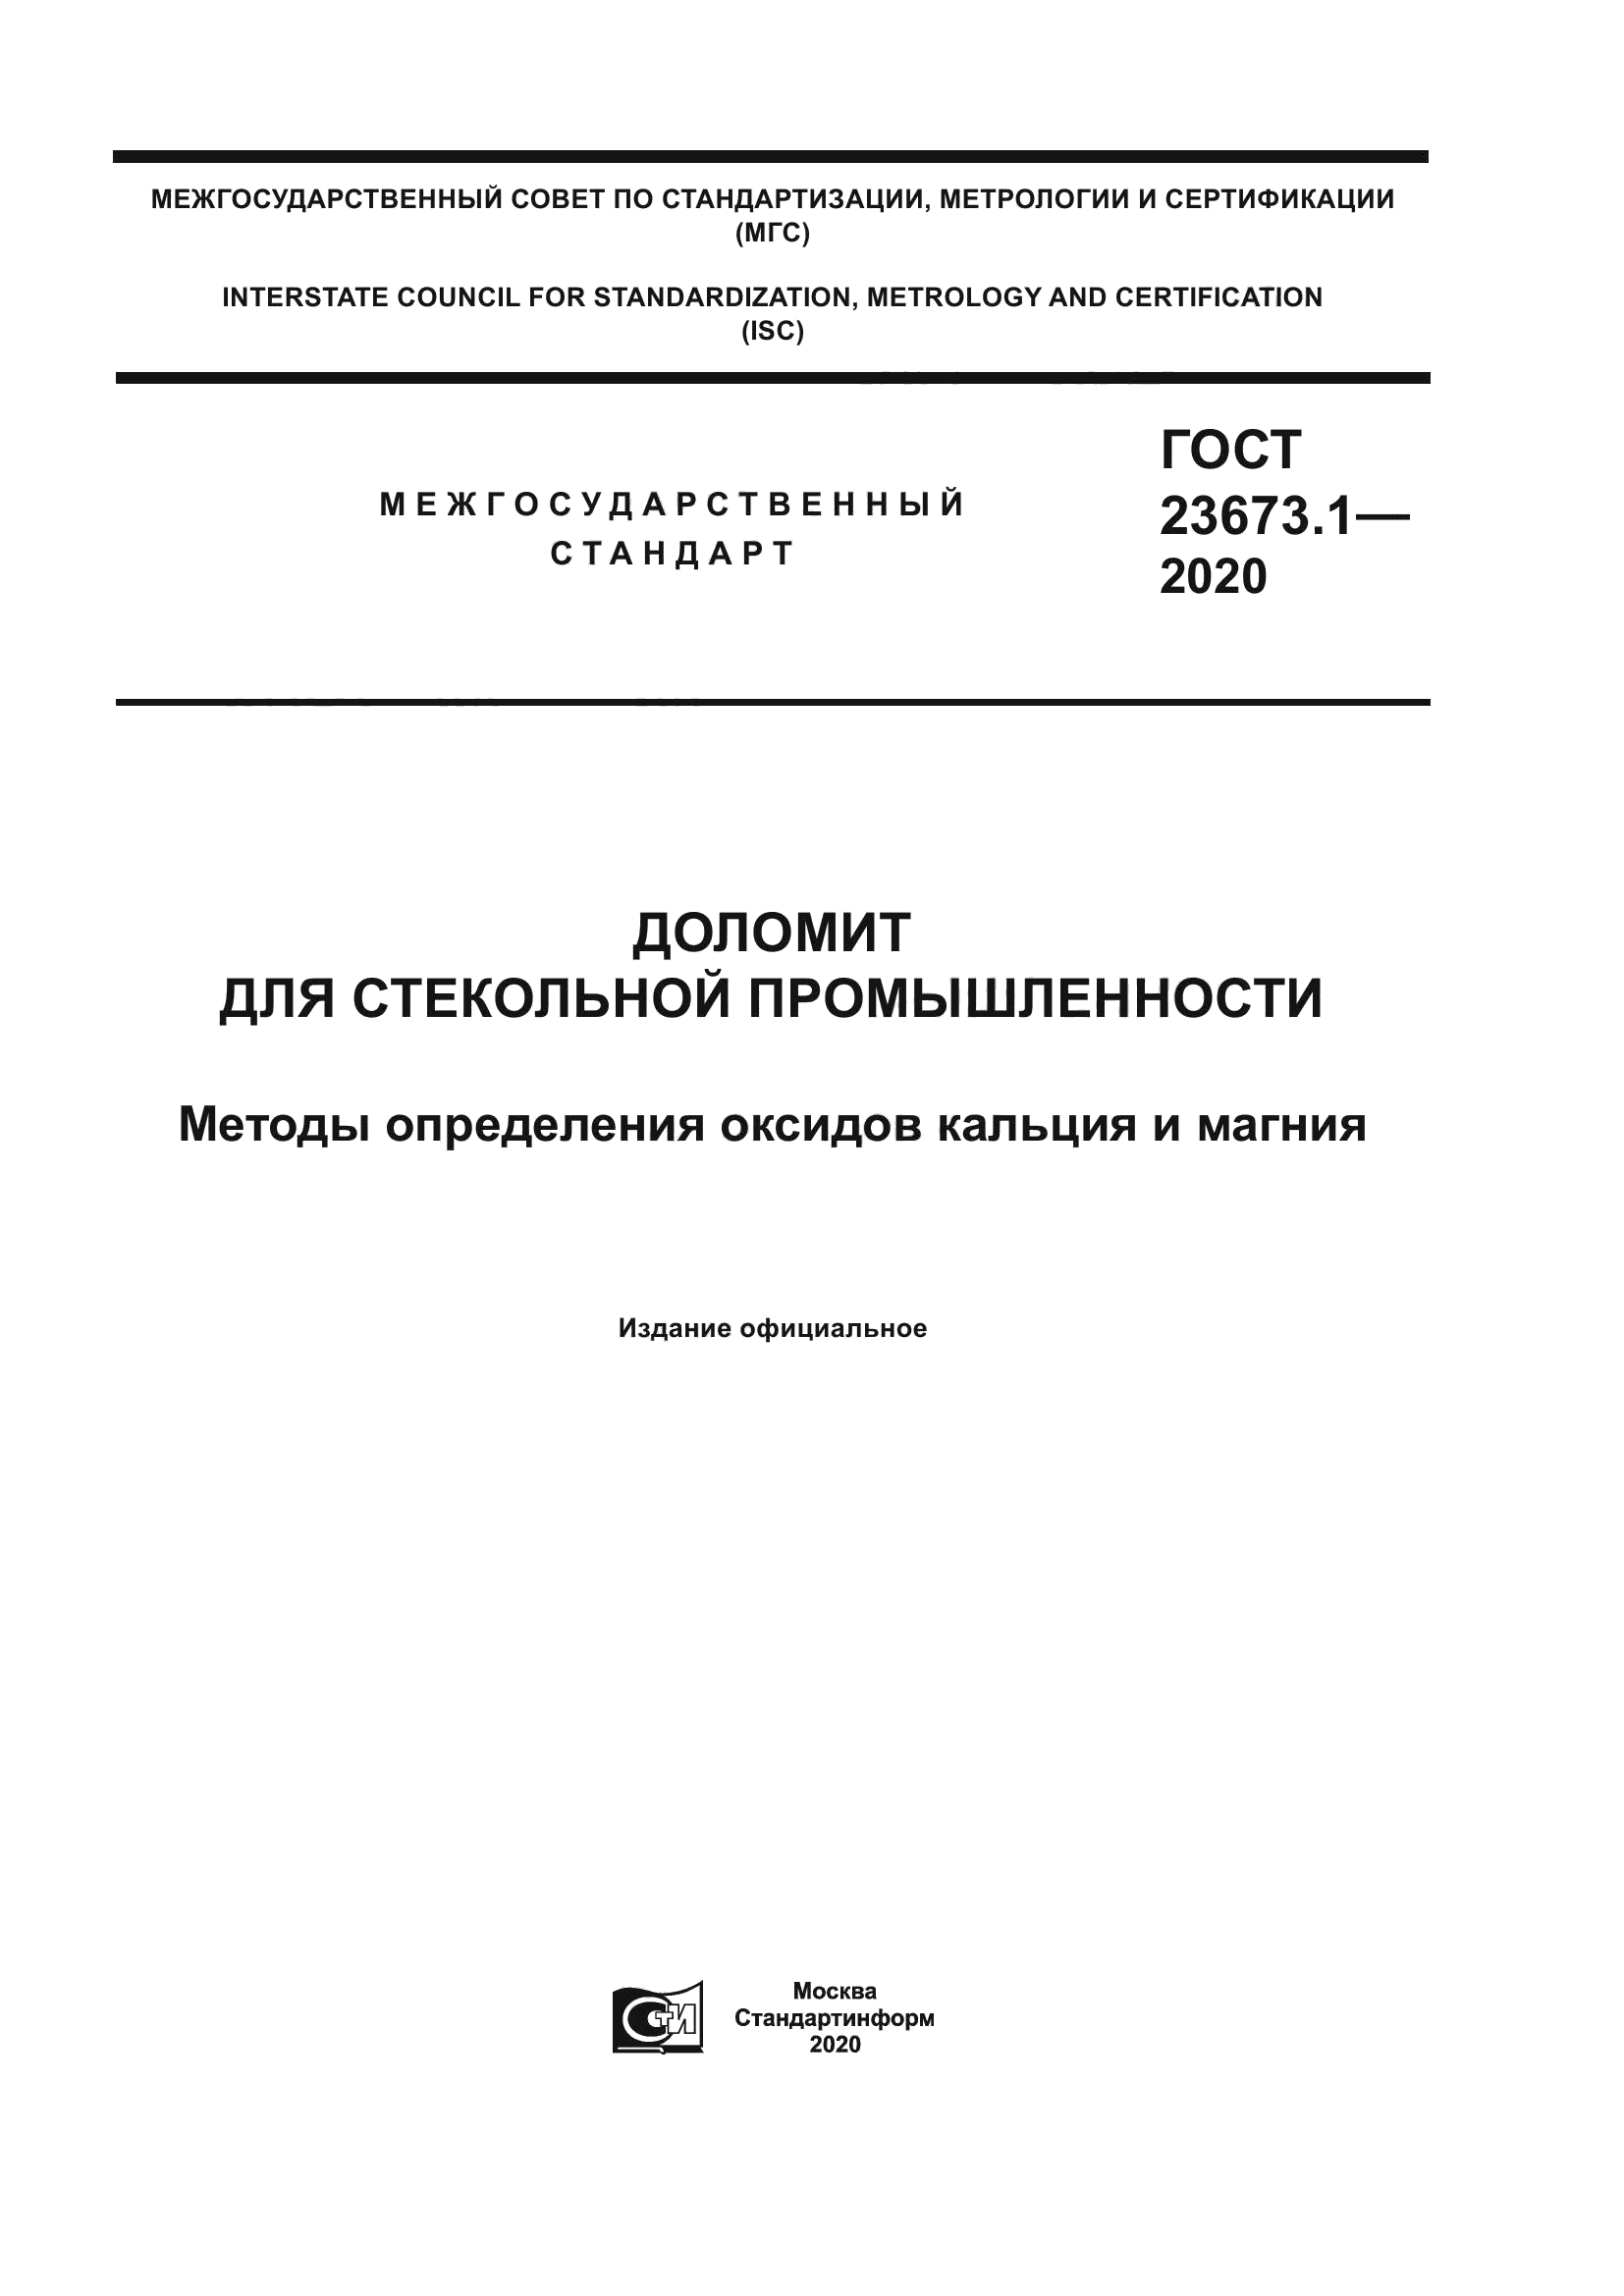 ГОСТ 23673.1-2020